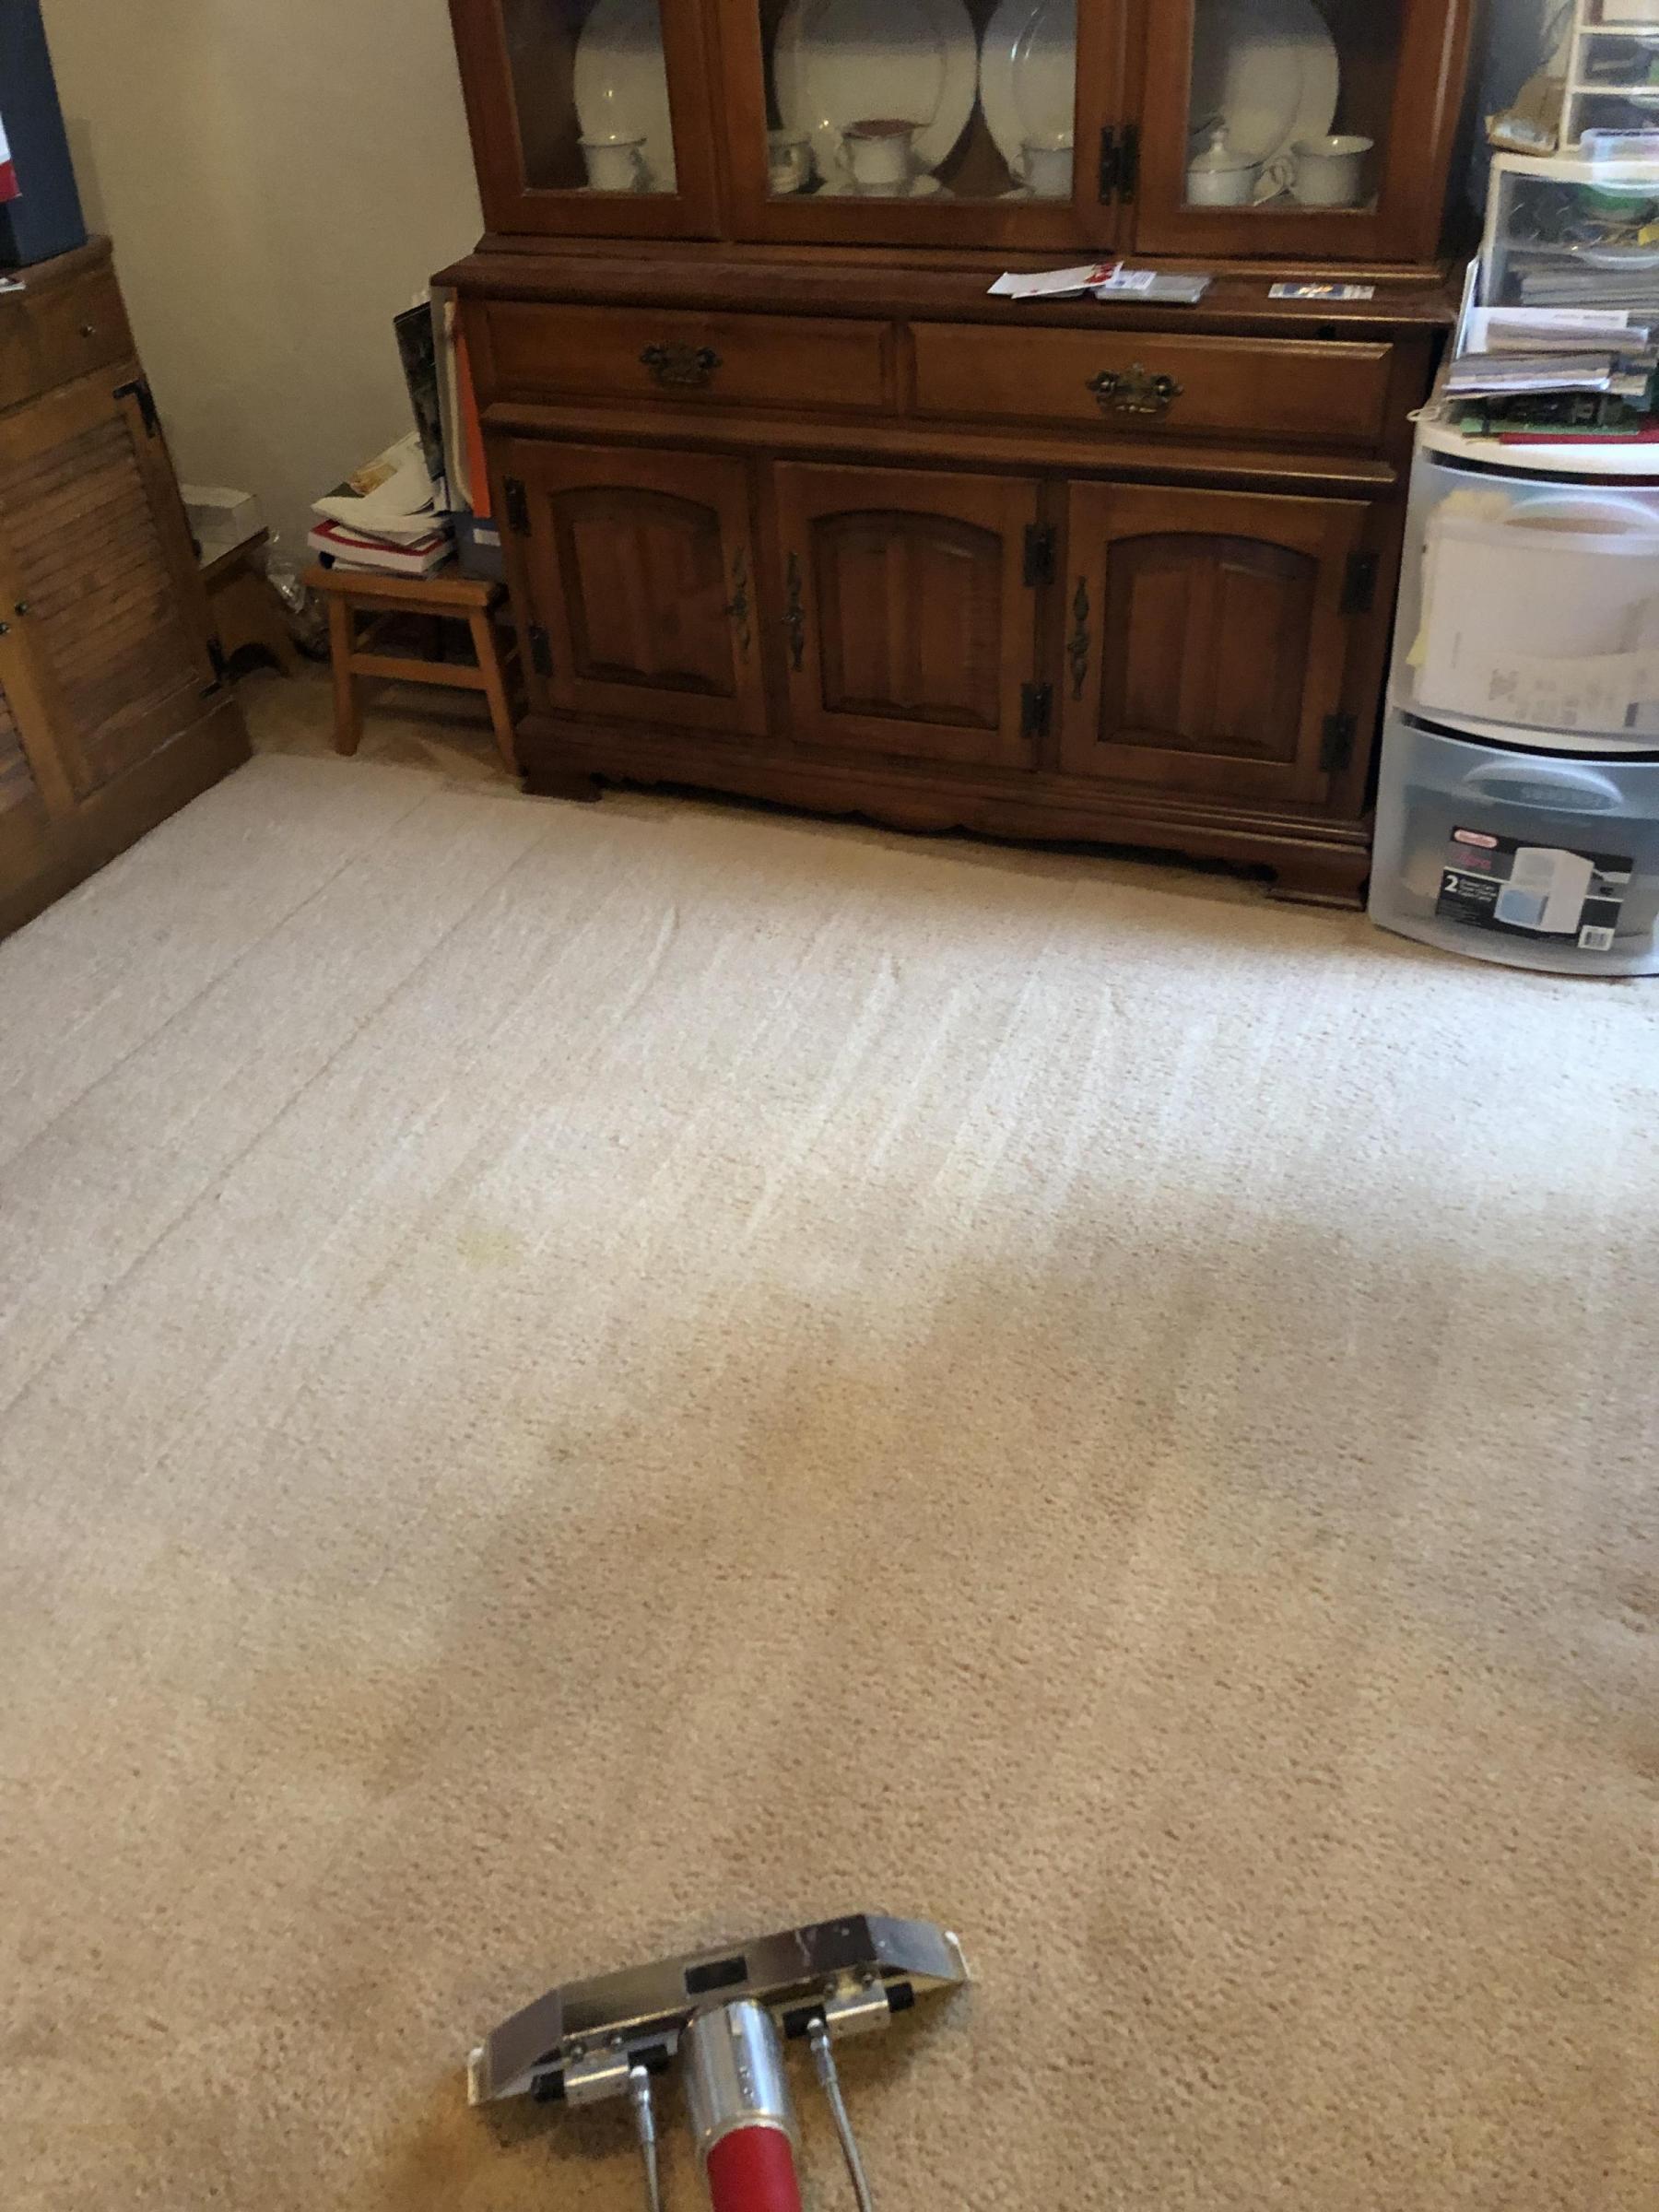 Prescott Carpet Cleaning. Best Way To Clean Carpets?